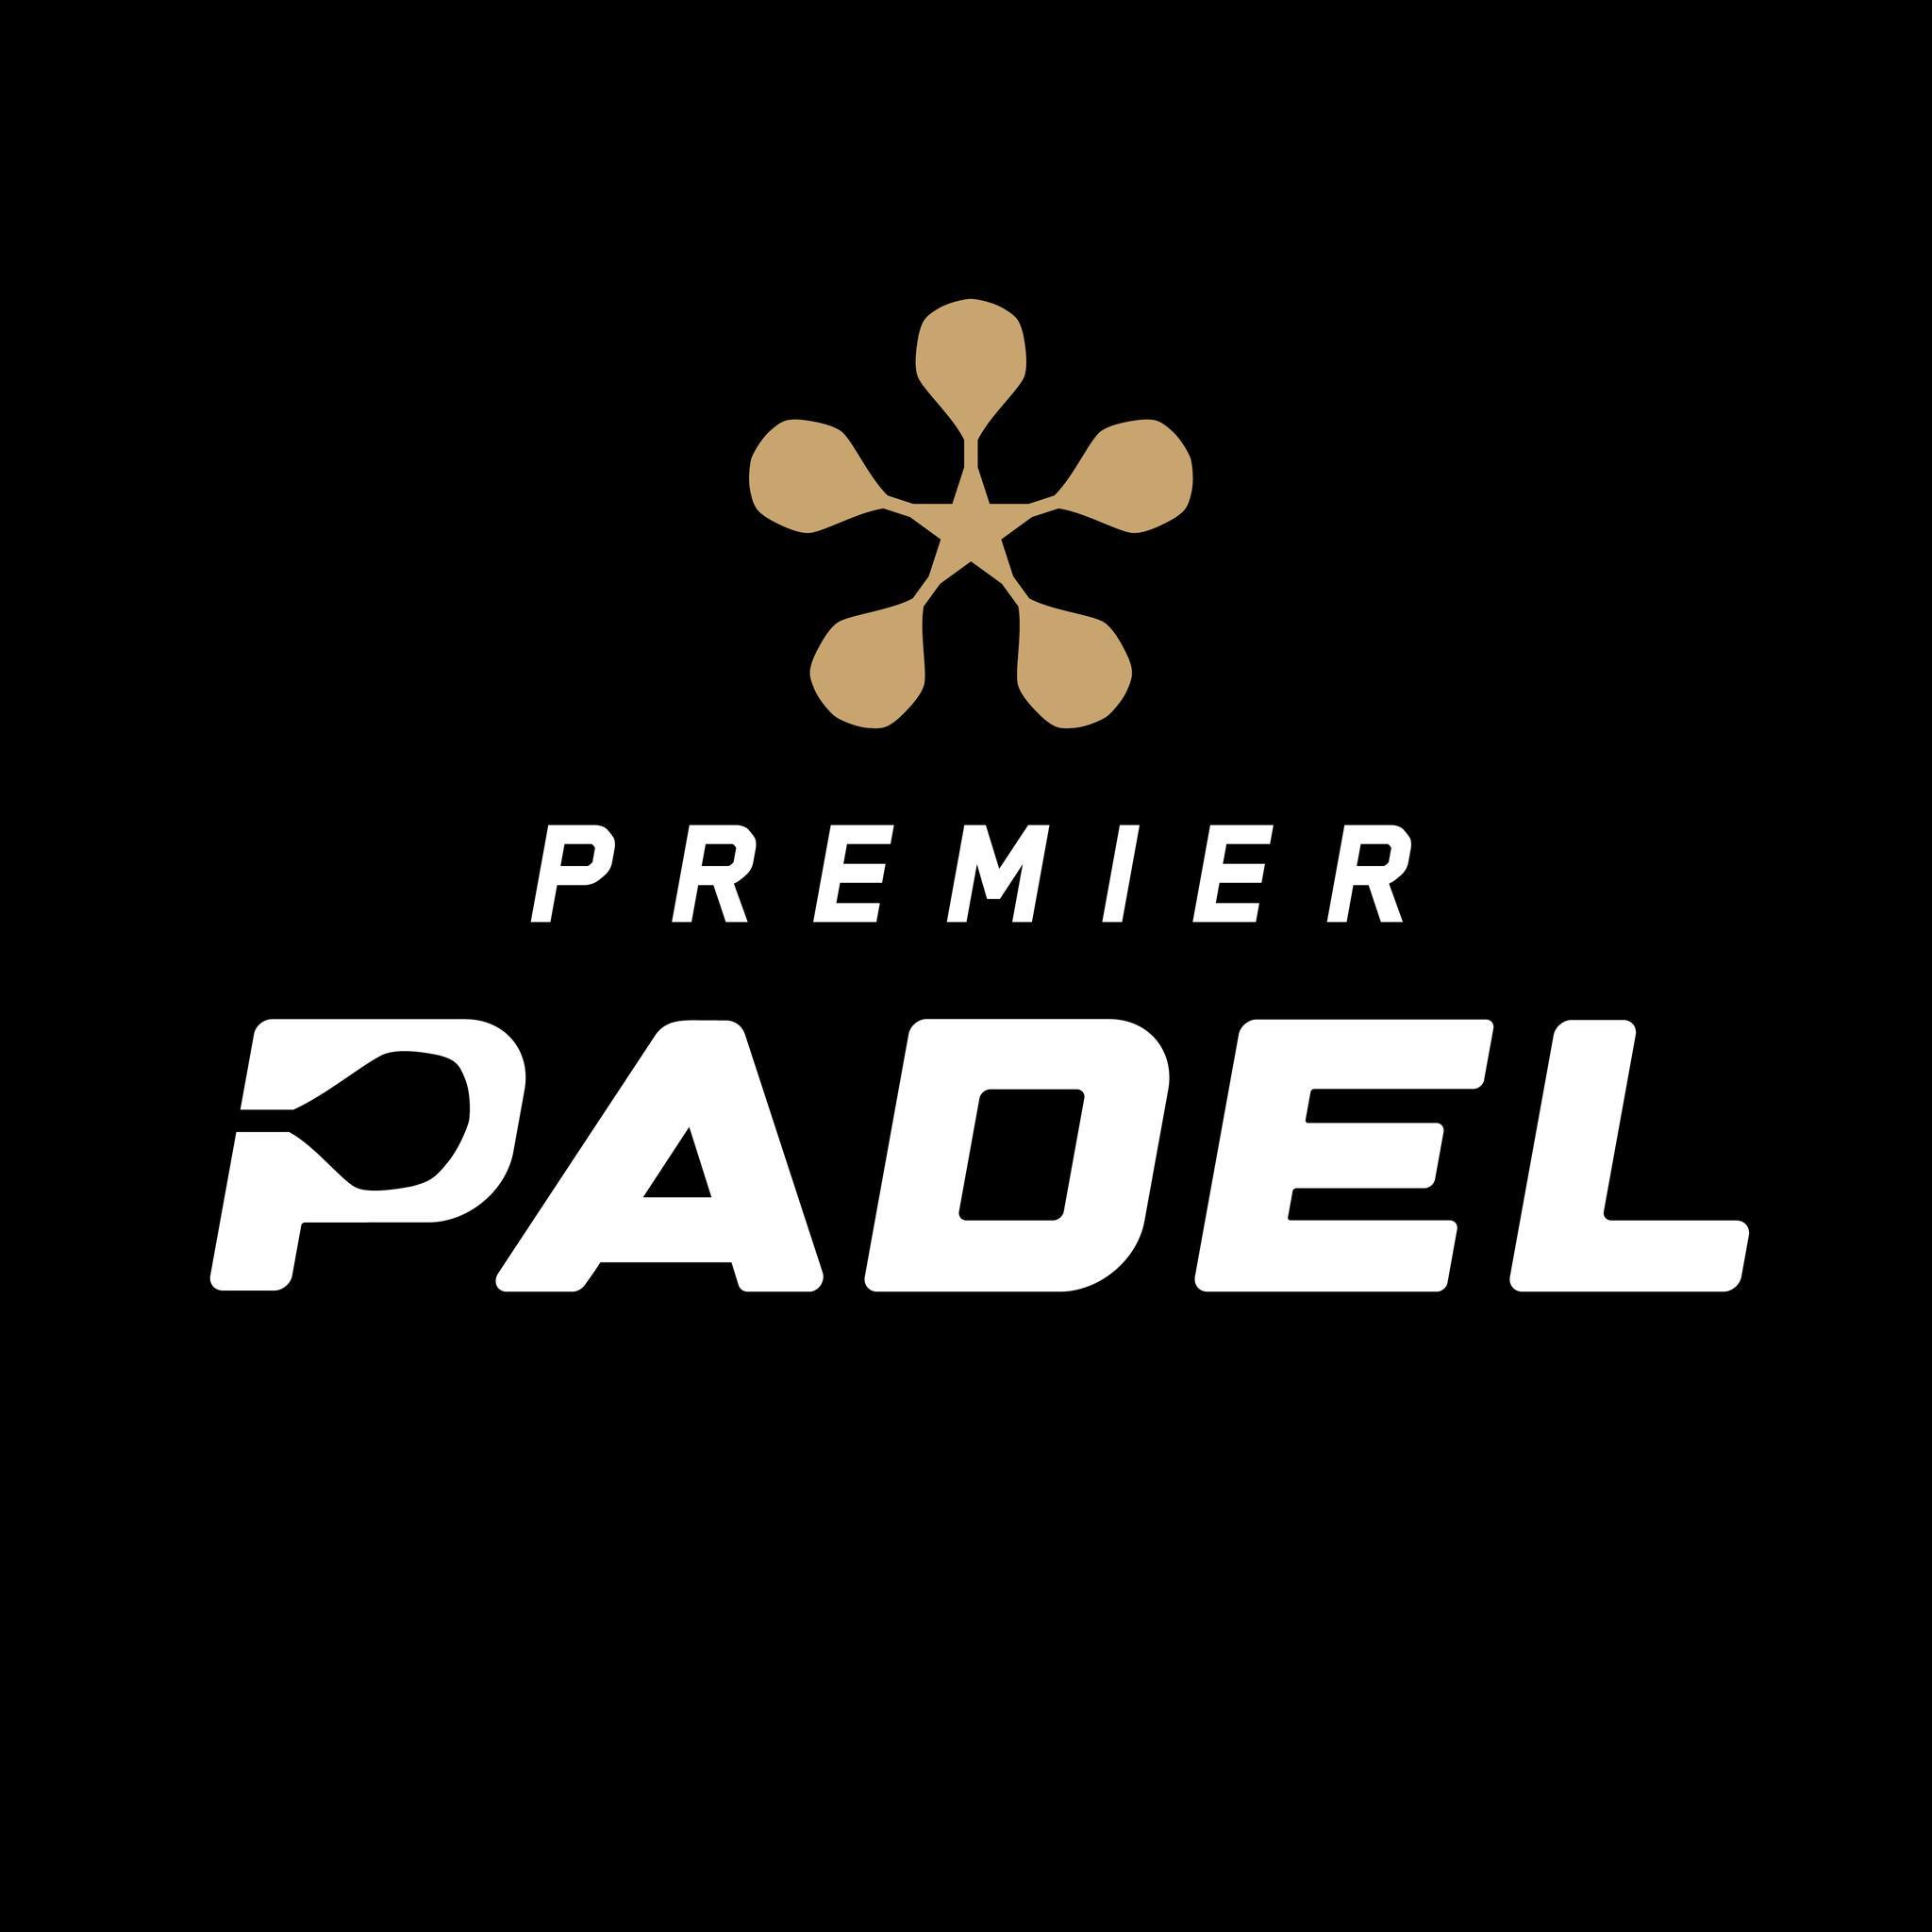 Premier Padel Logotipo